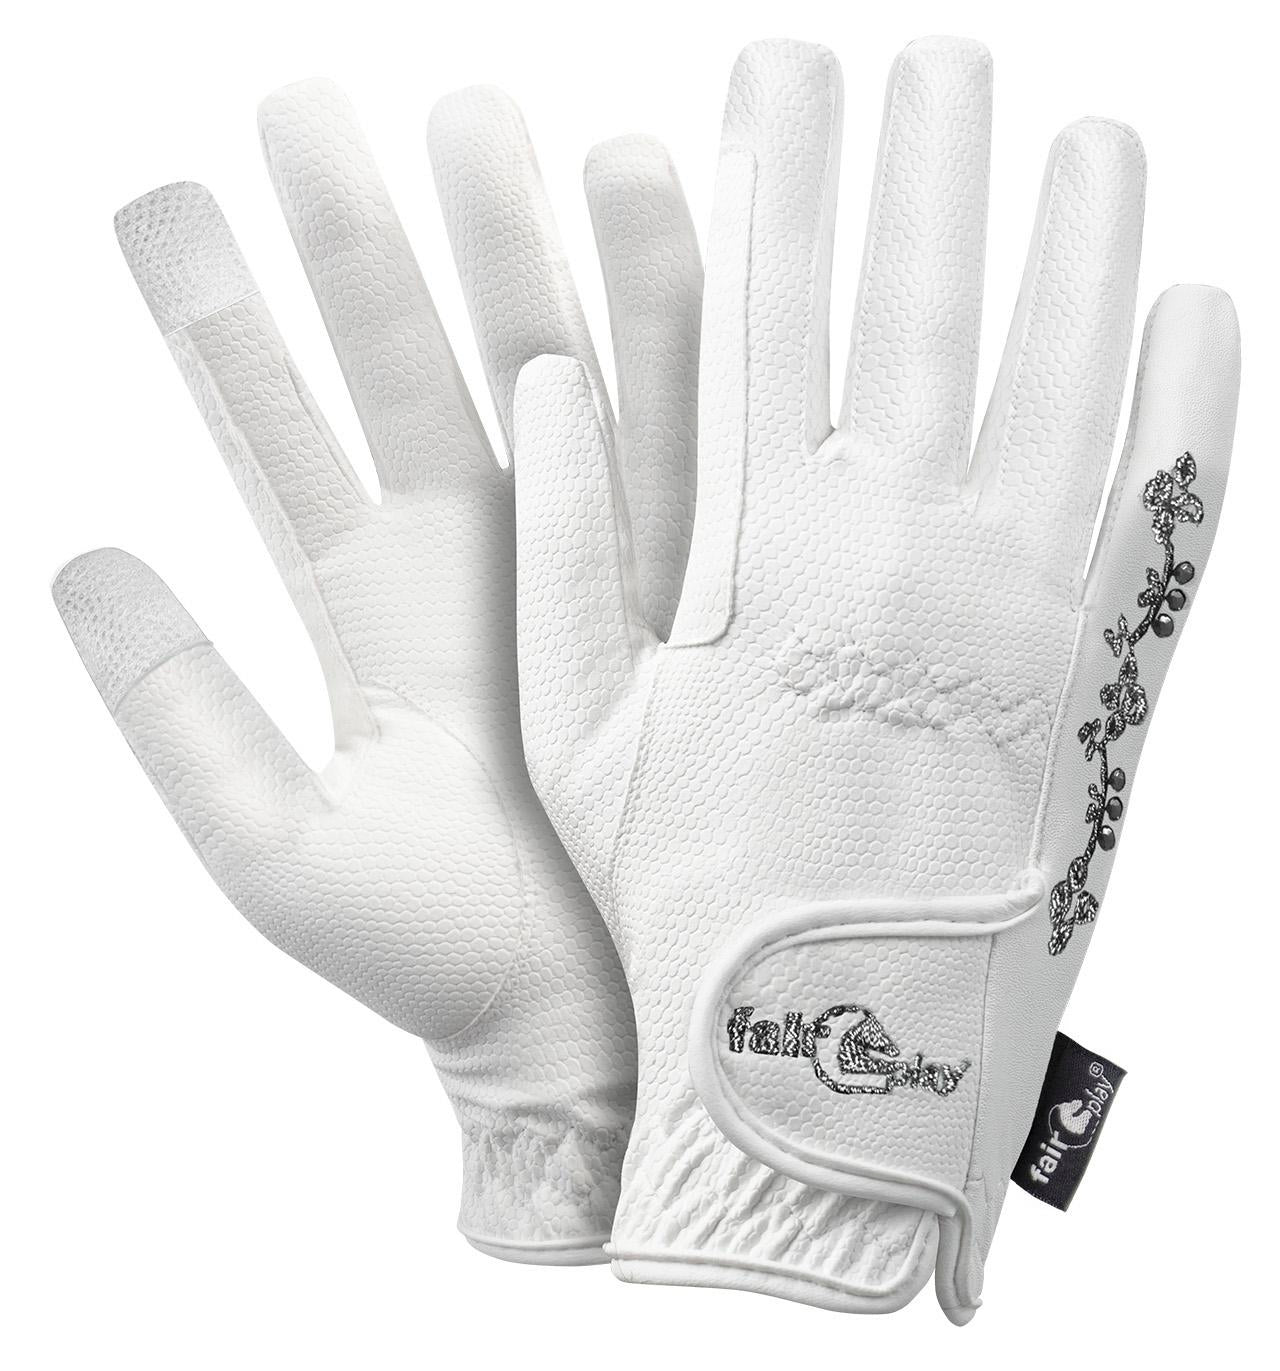 Fairplay Asti Fleur Gloves